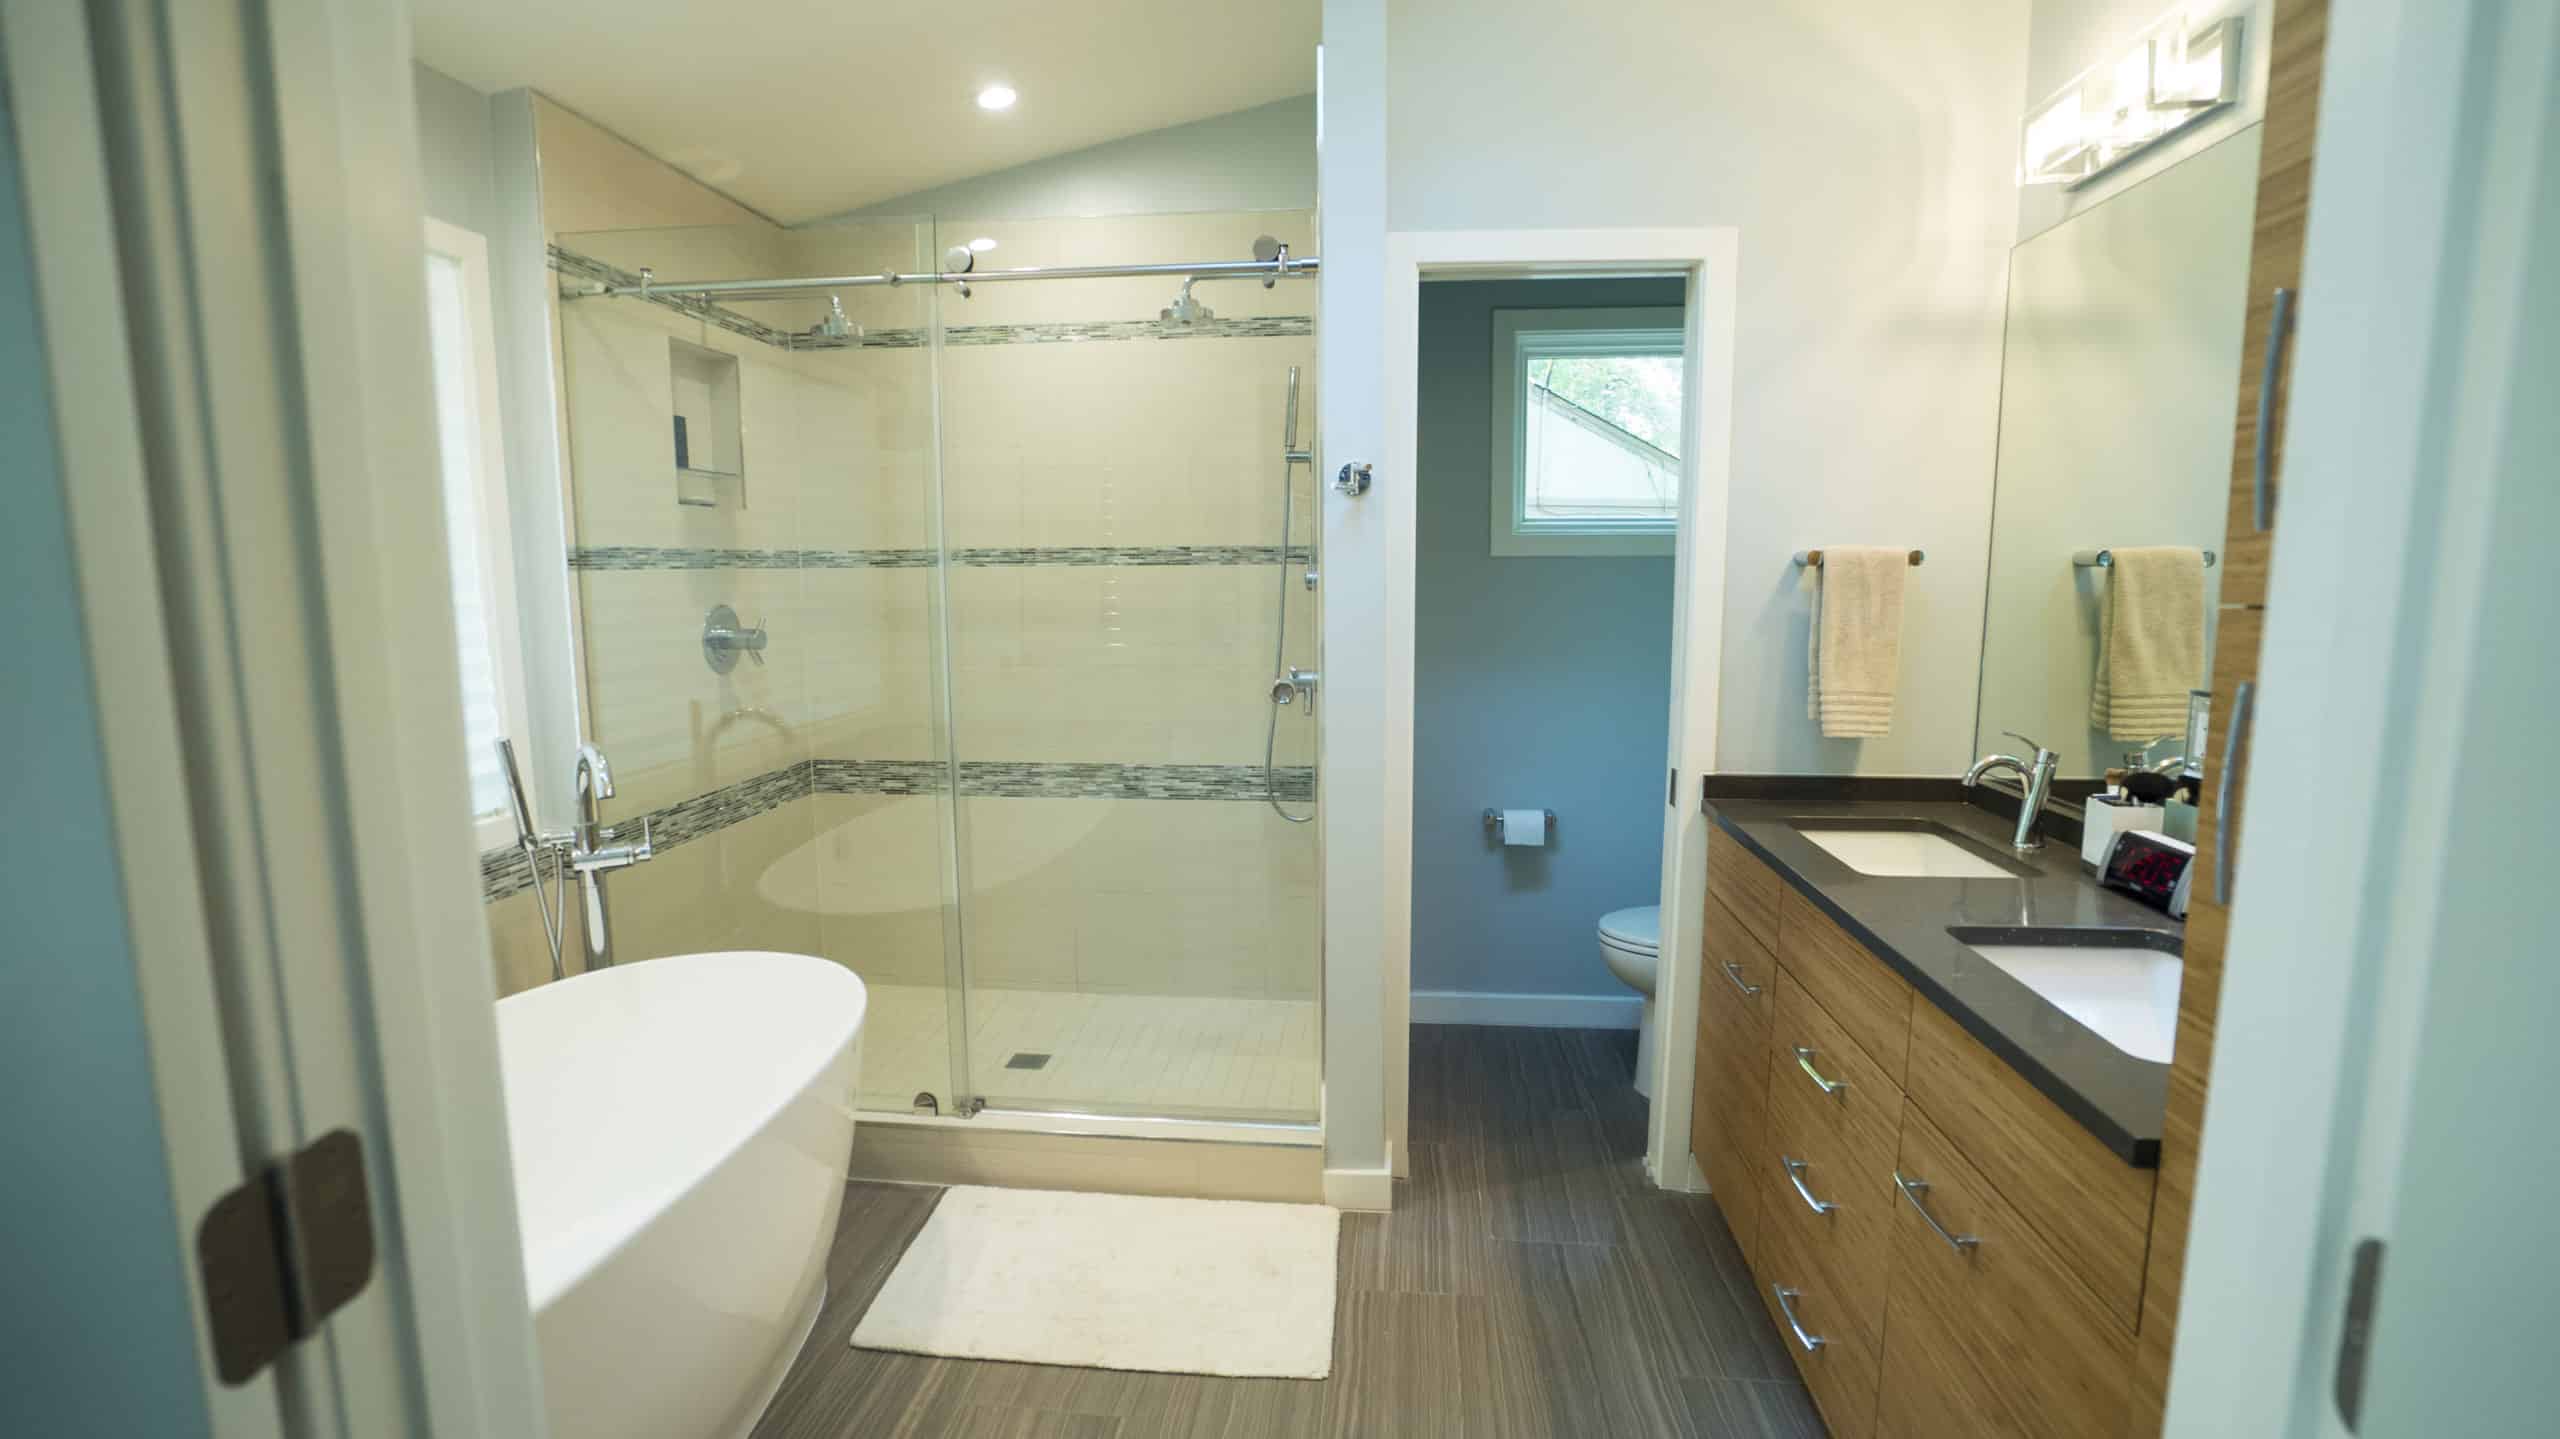 A modern bathroom featuring a spacious walk-in shower and a sleek sink